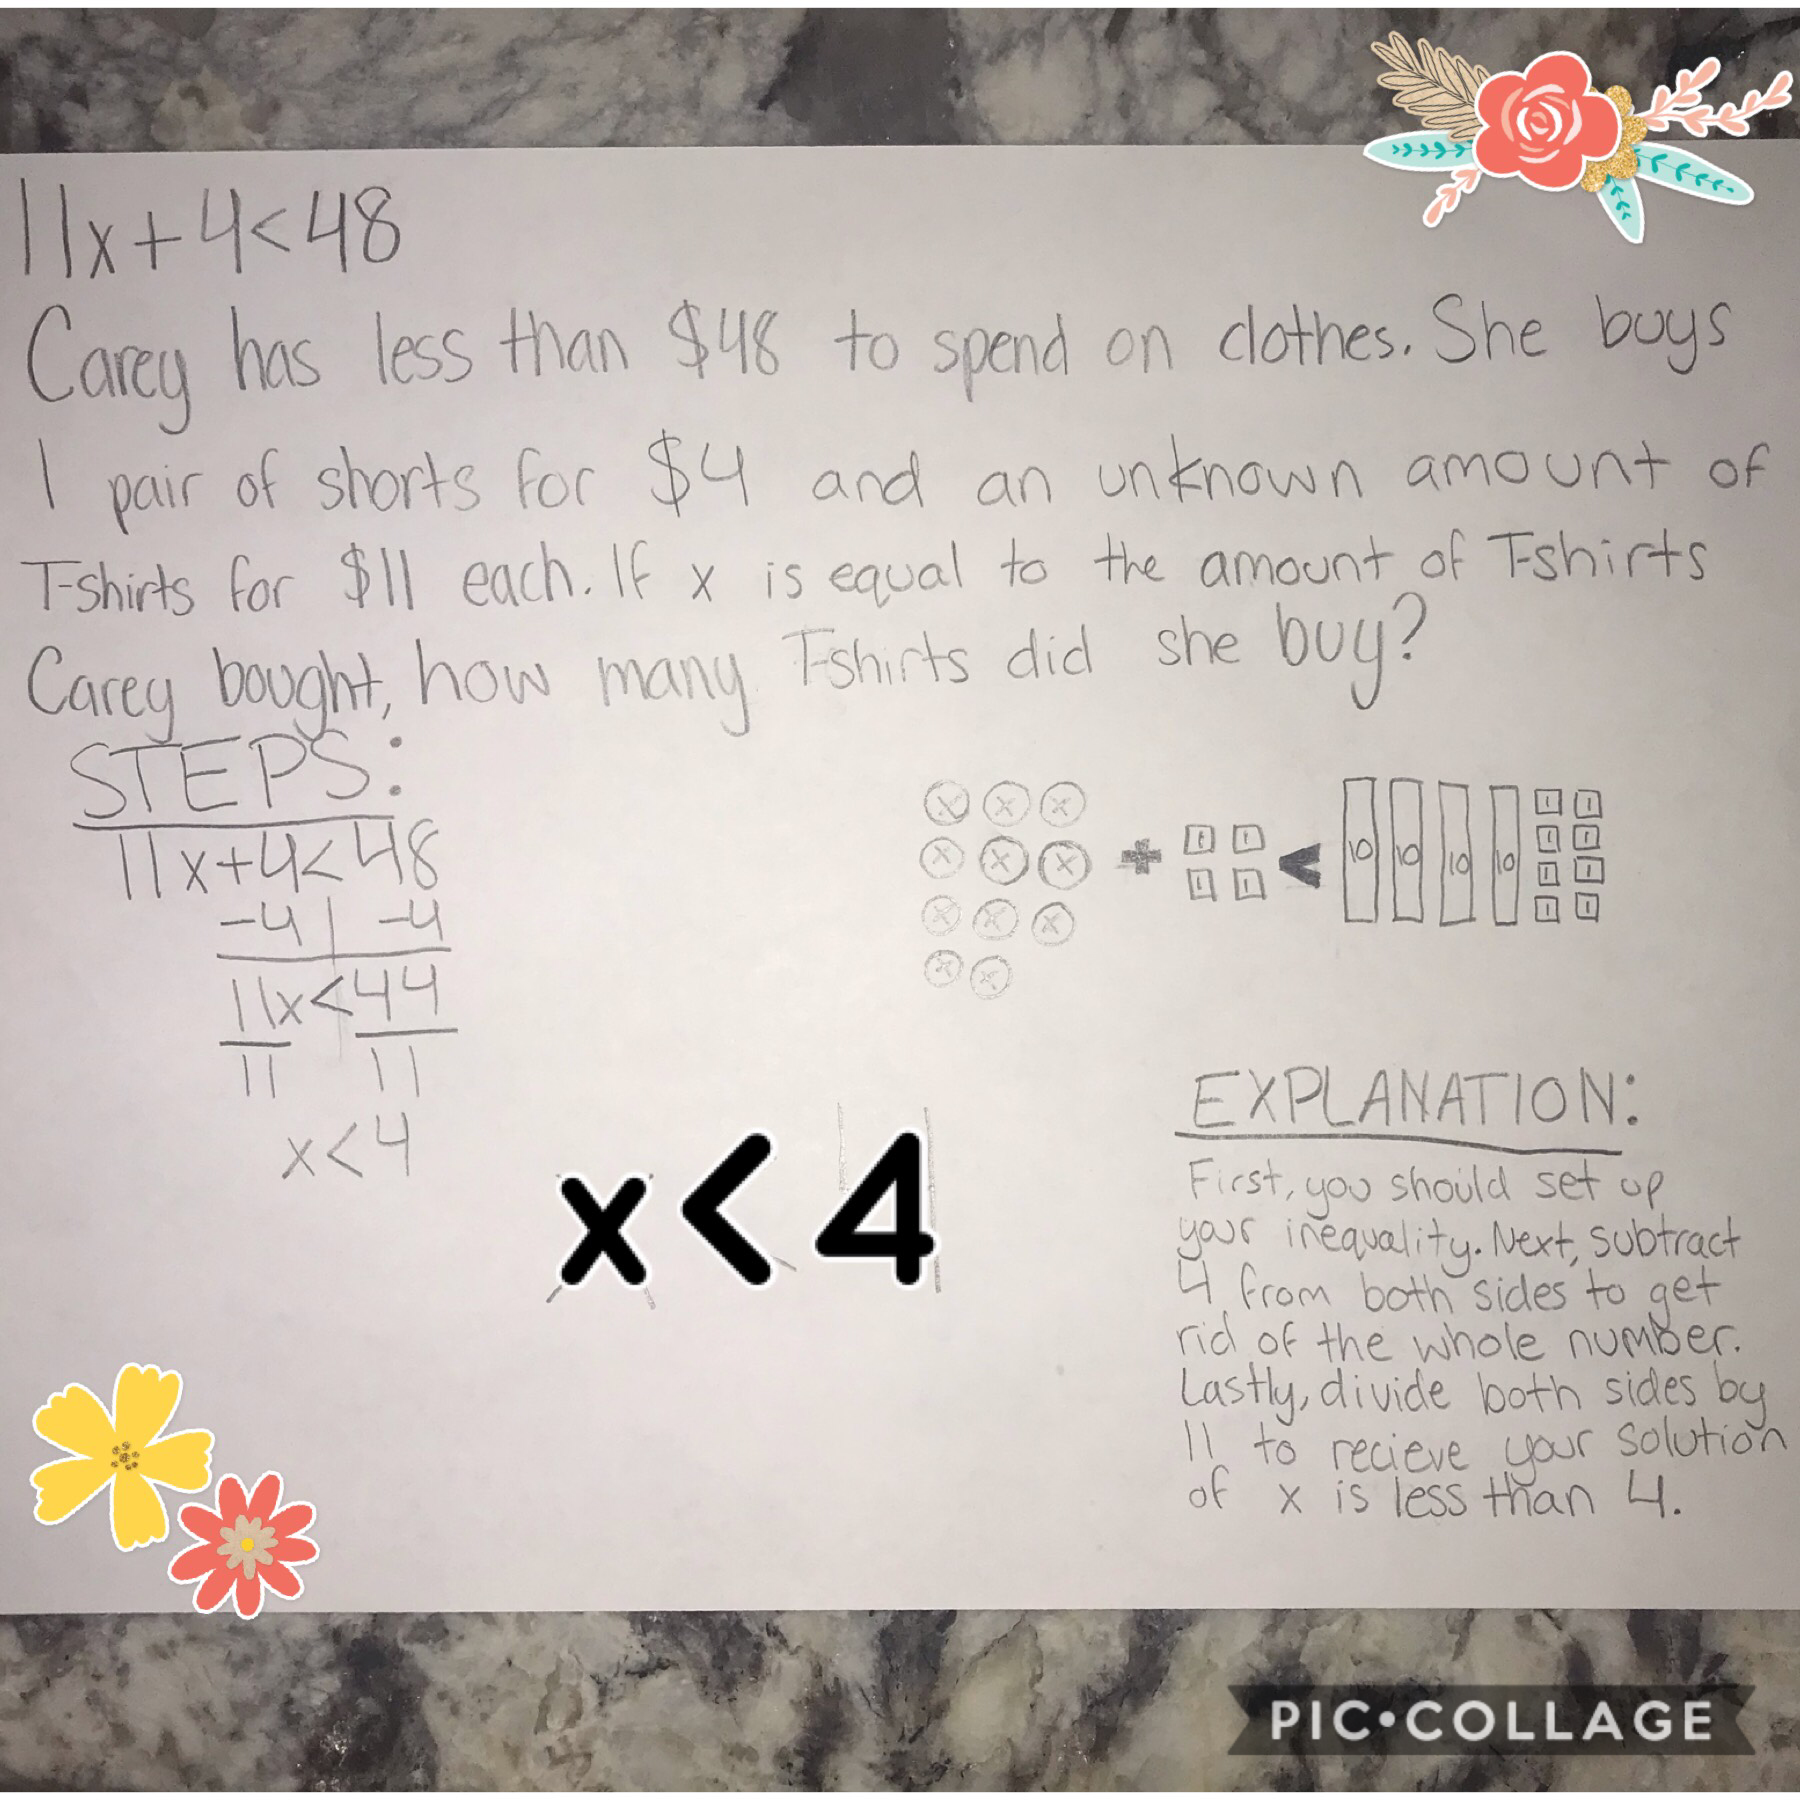 we love math homework, don’t we?